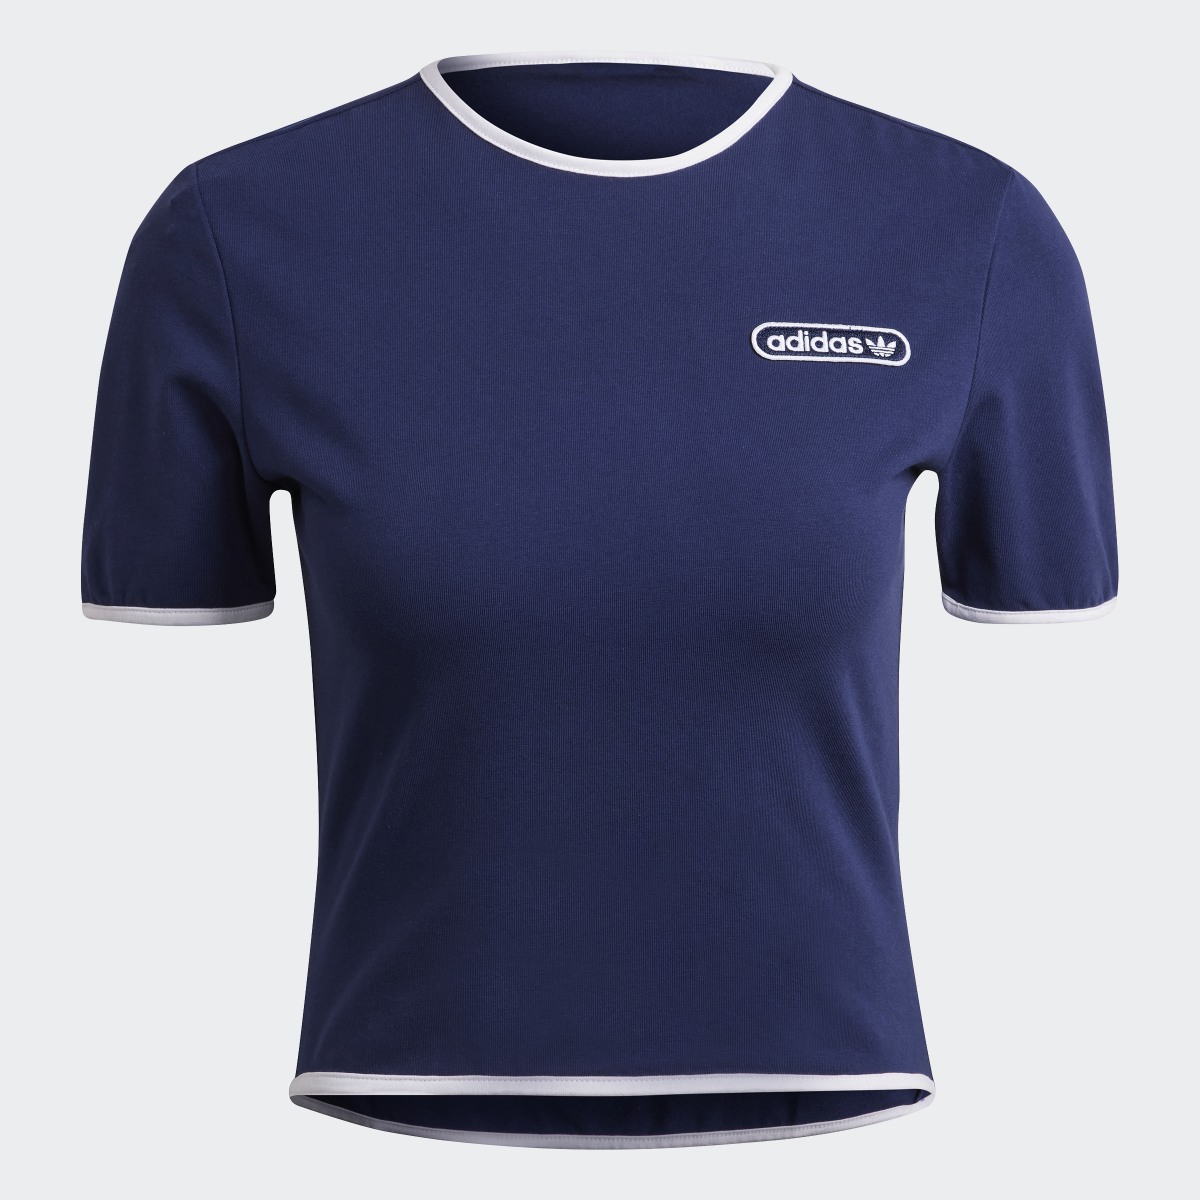 Adidas Crop T-Shirt with Binding Details. 5